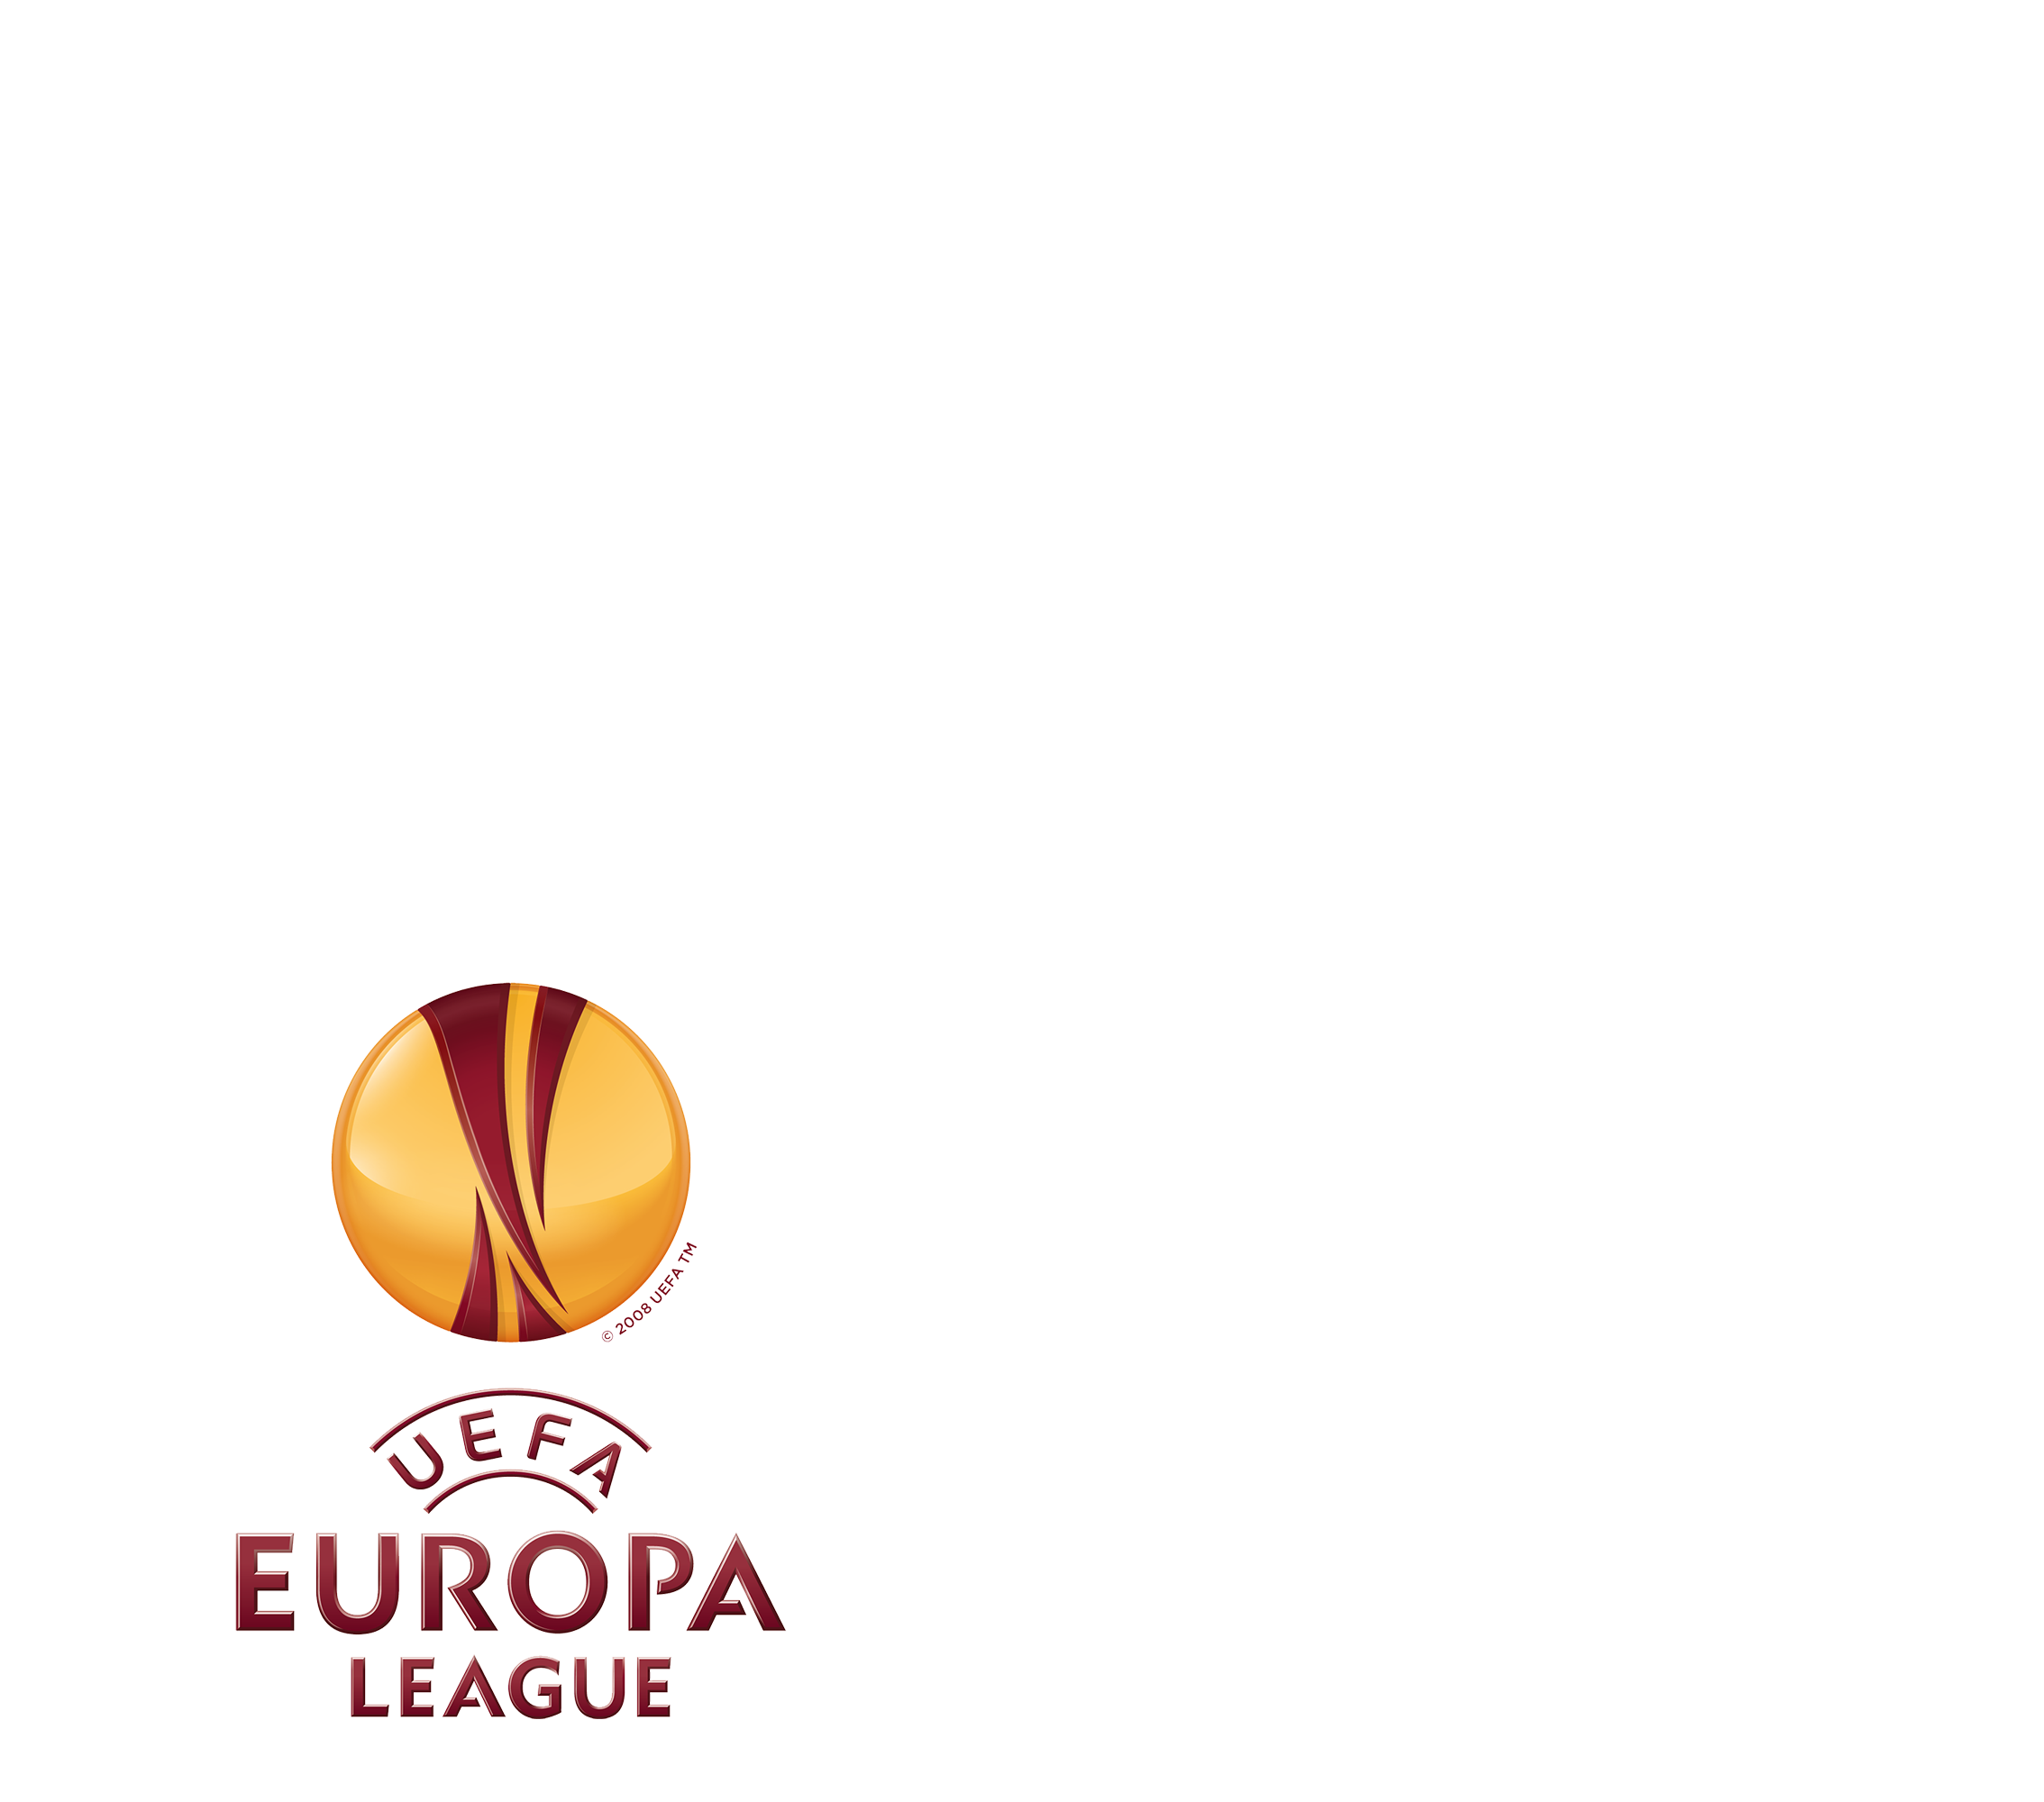 Europa League 2018/19